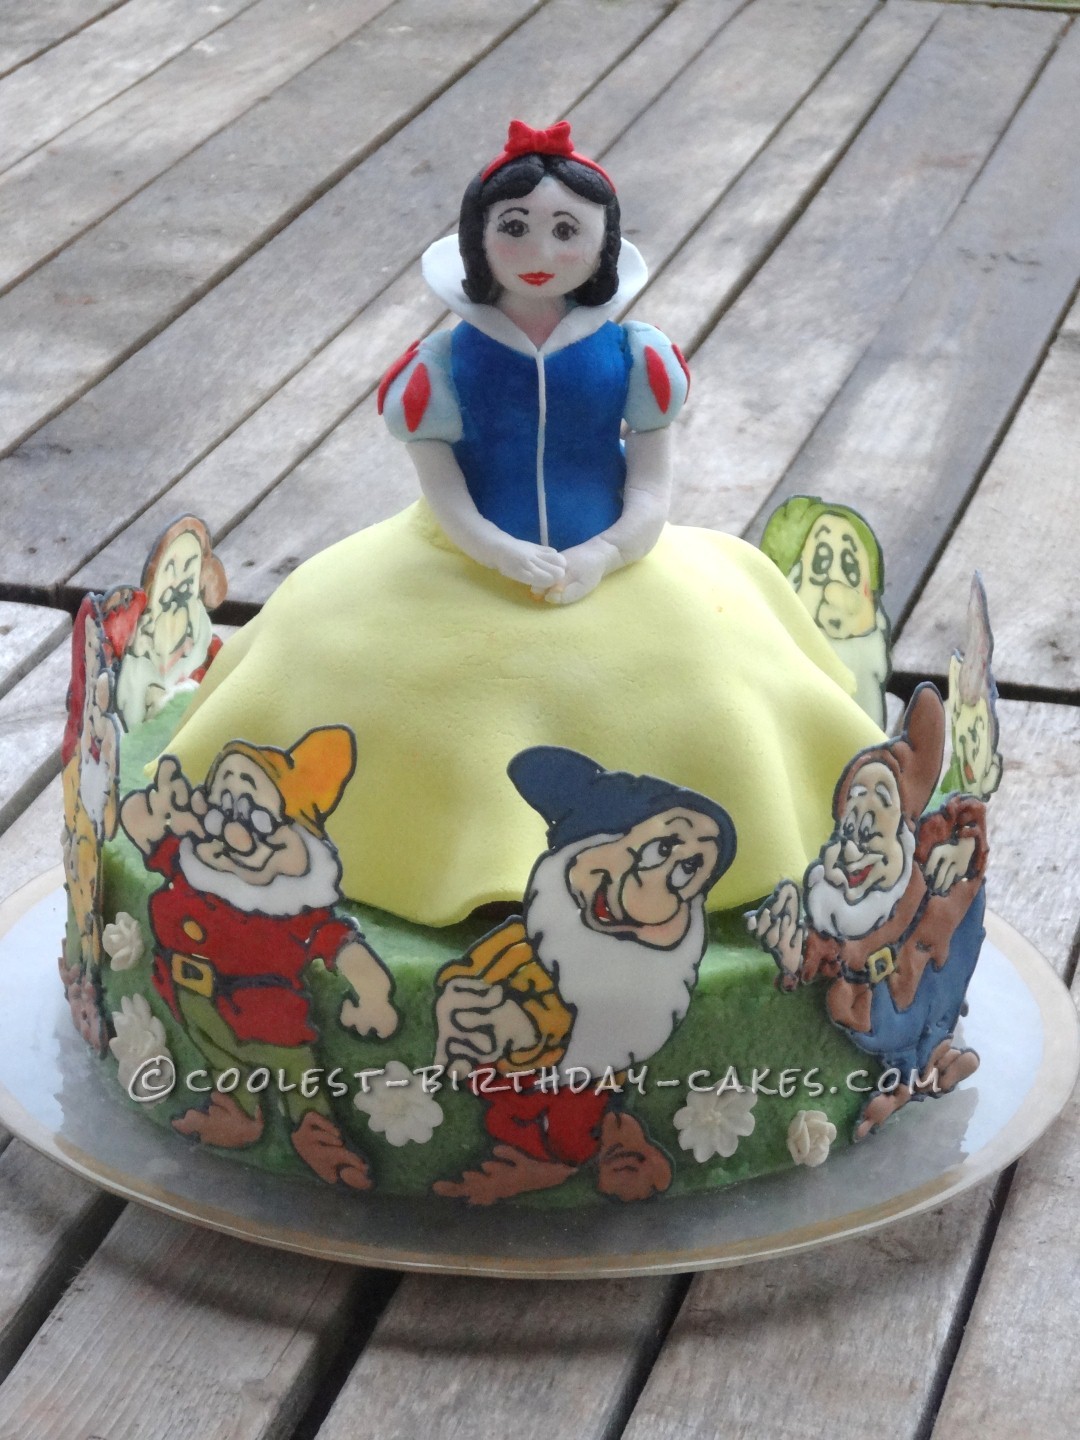 Coolest Snow White Cake